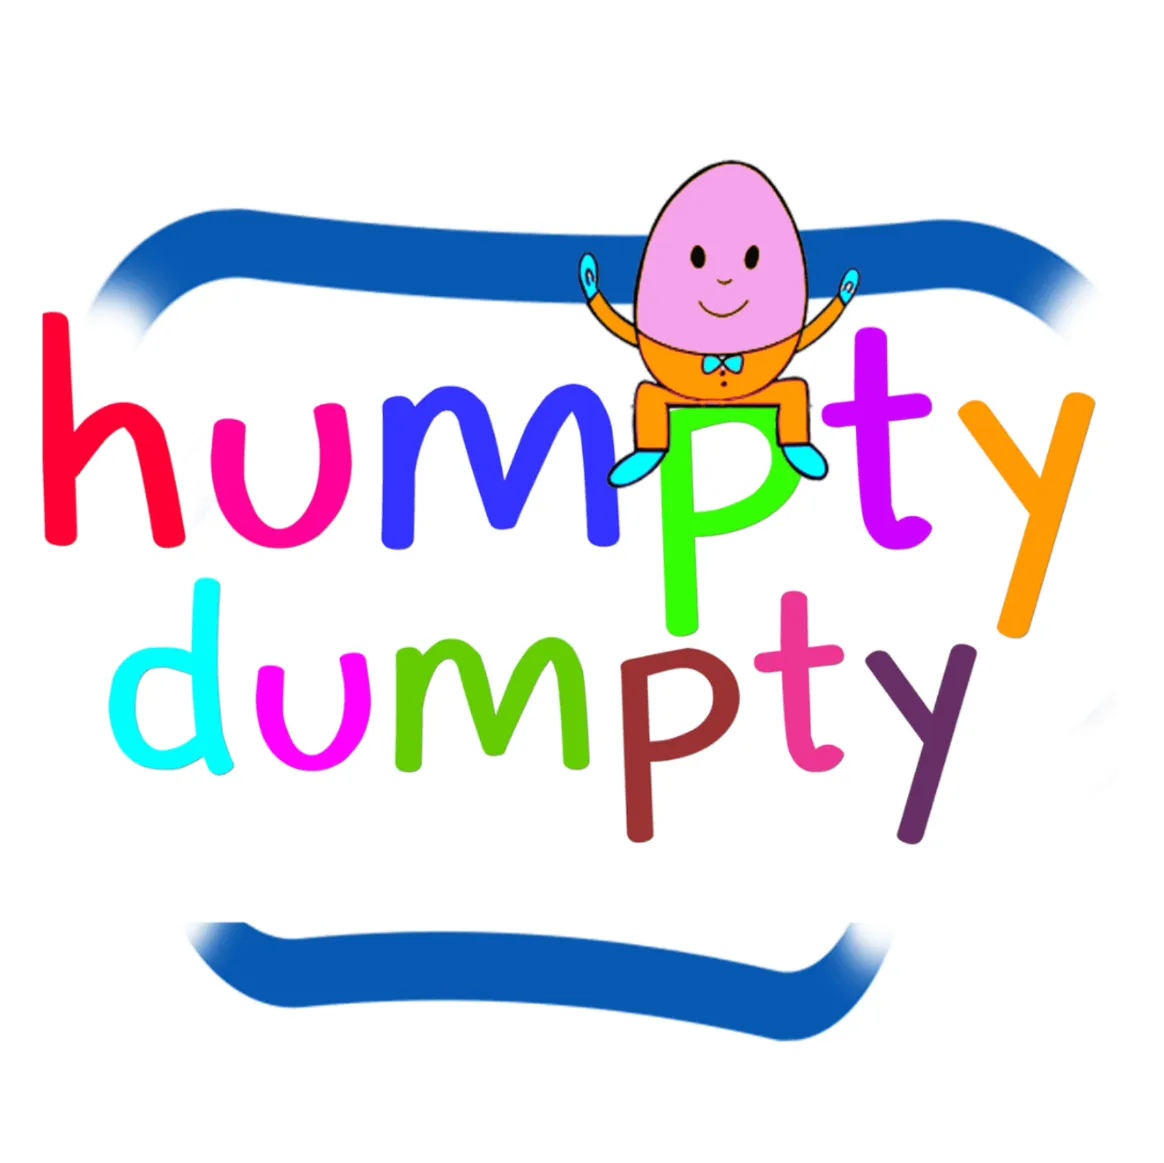 Humpty-Dumpty